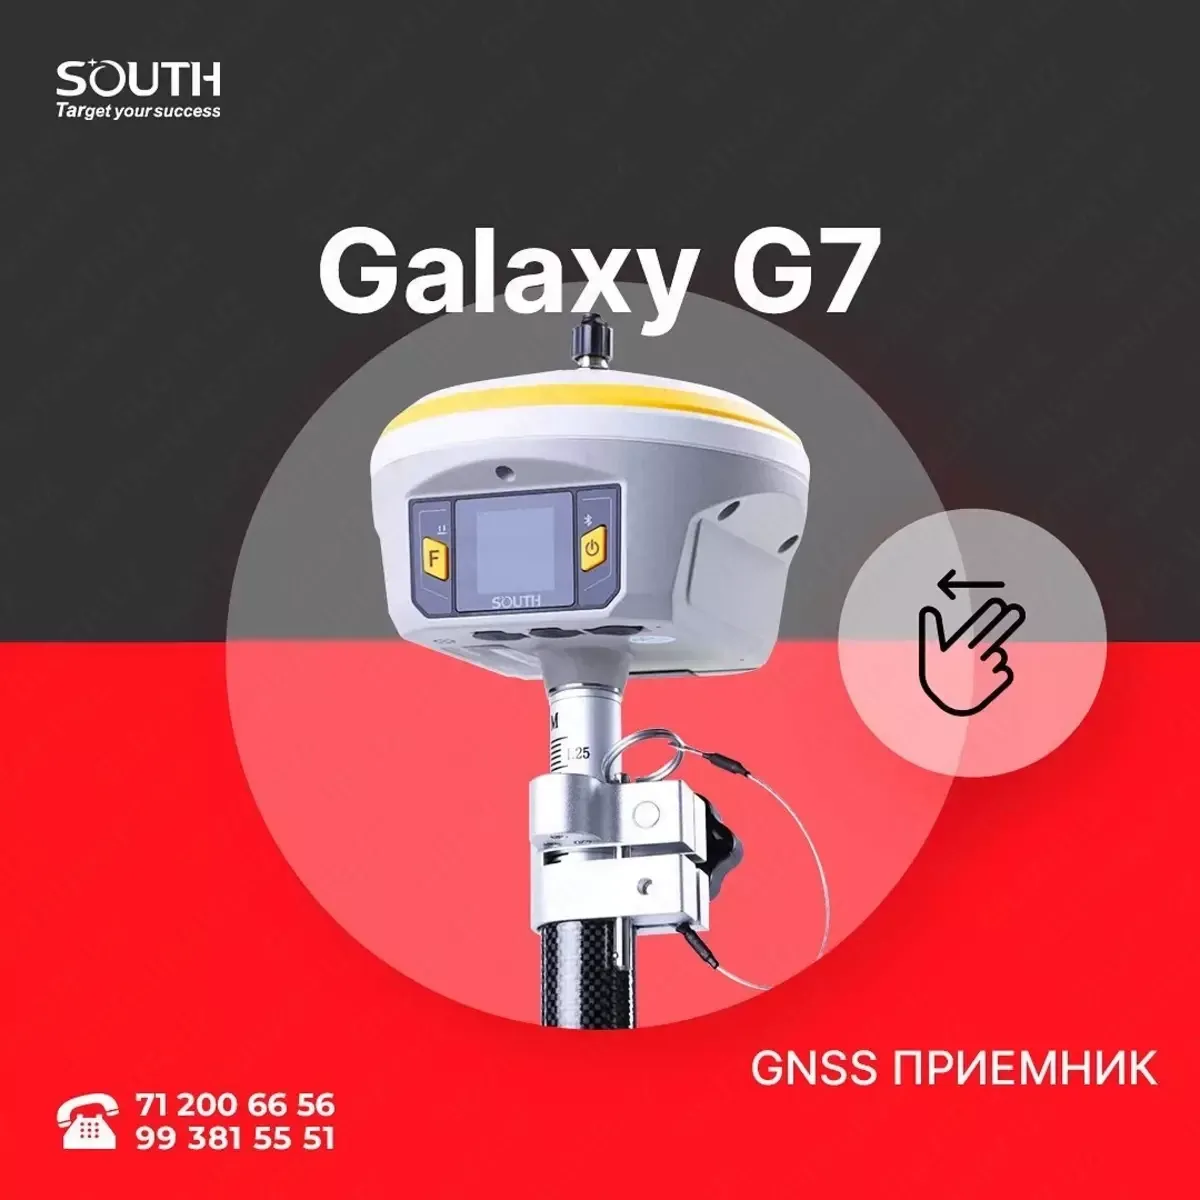 GNSS приемник SOUTH GALAXY G7#2